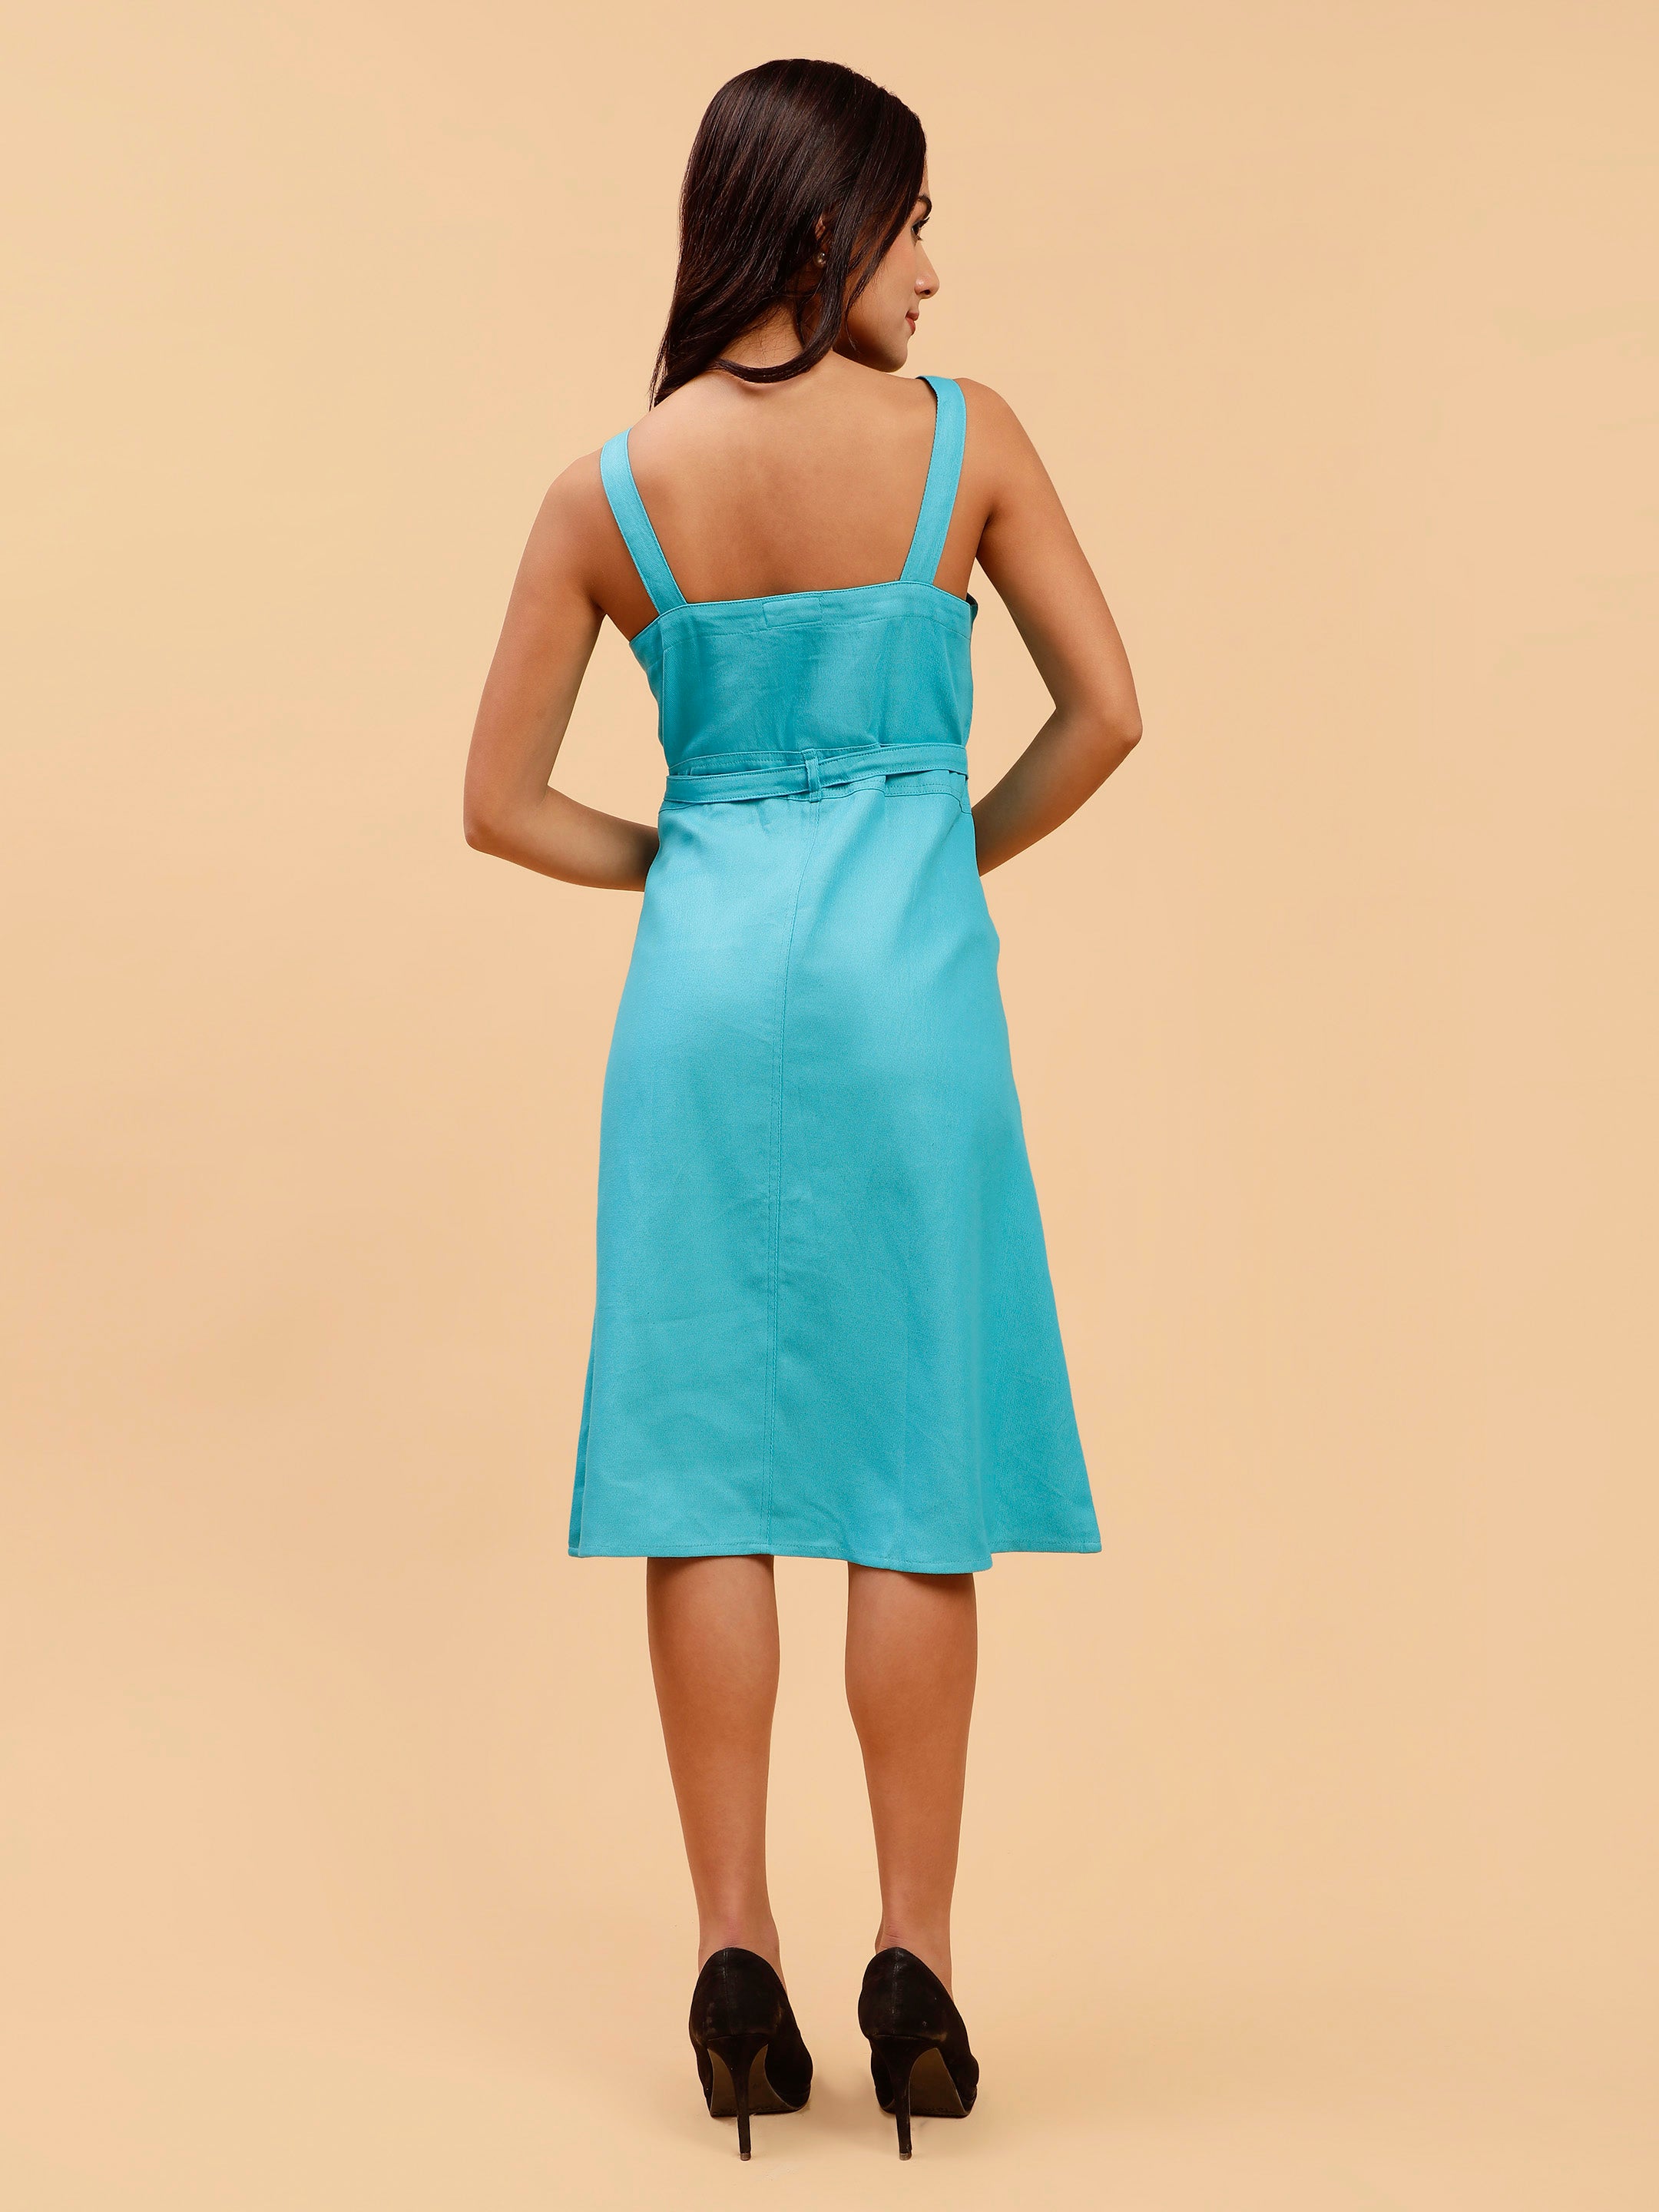 Glamoda A-Line Blue Dress